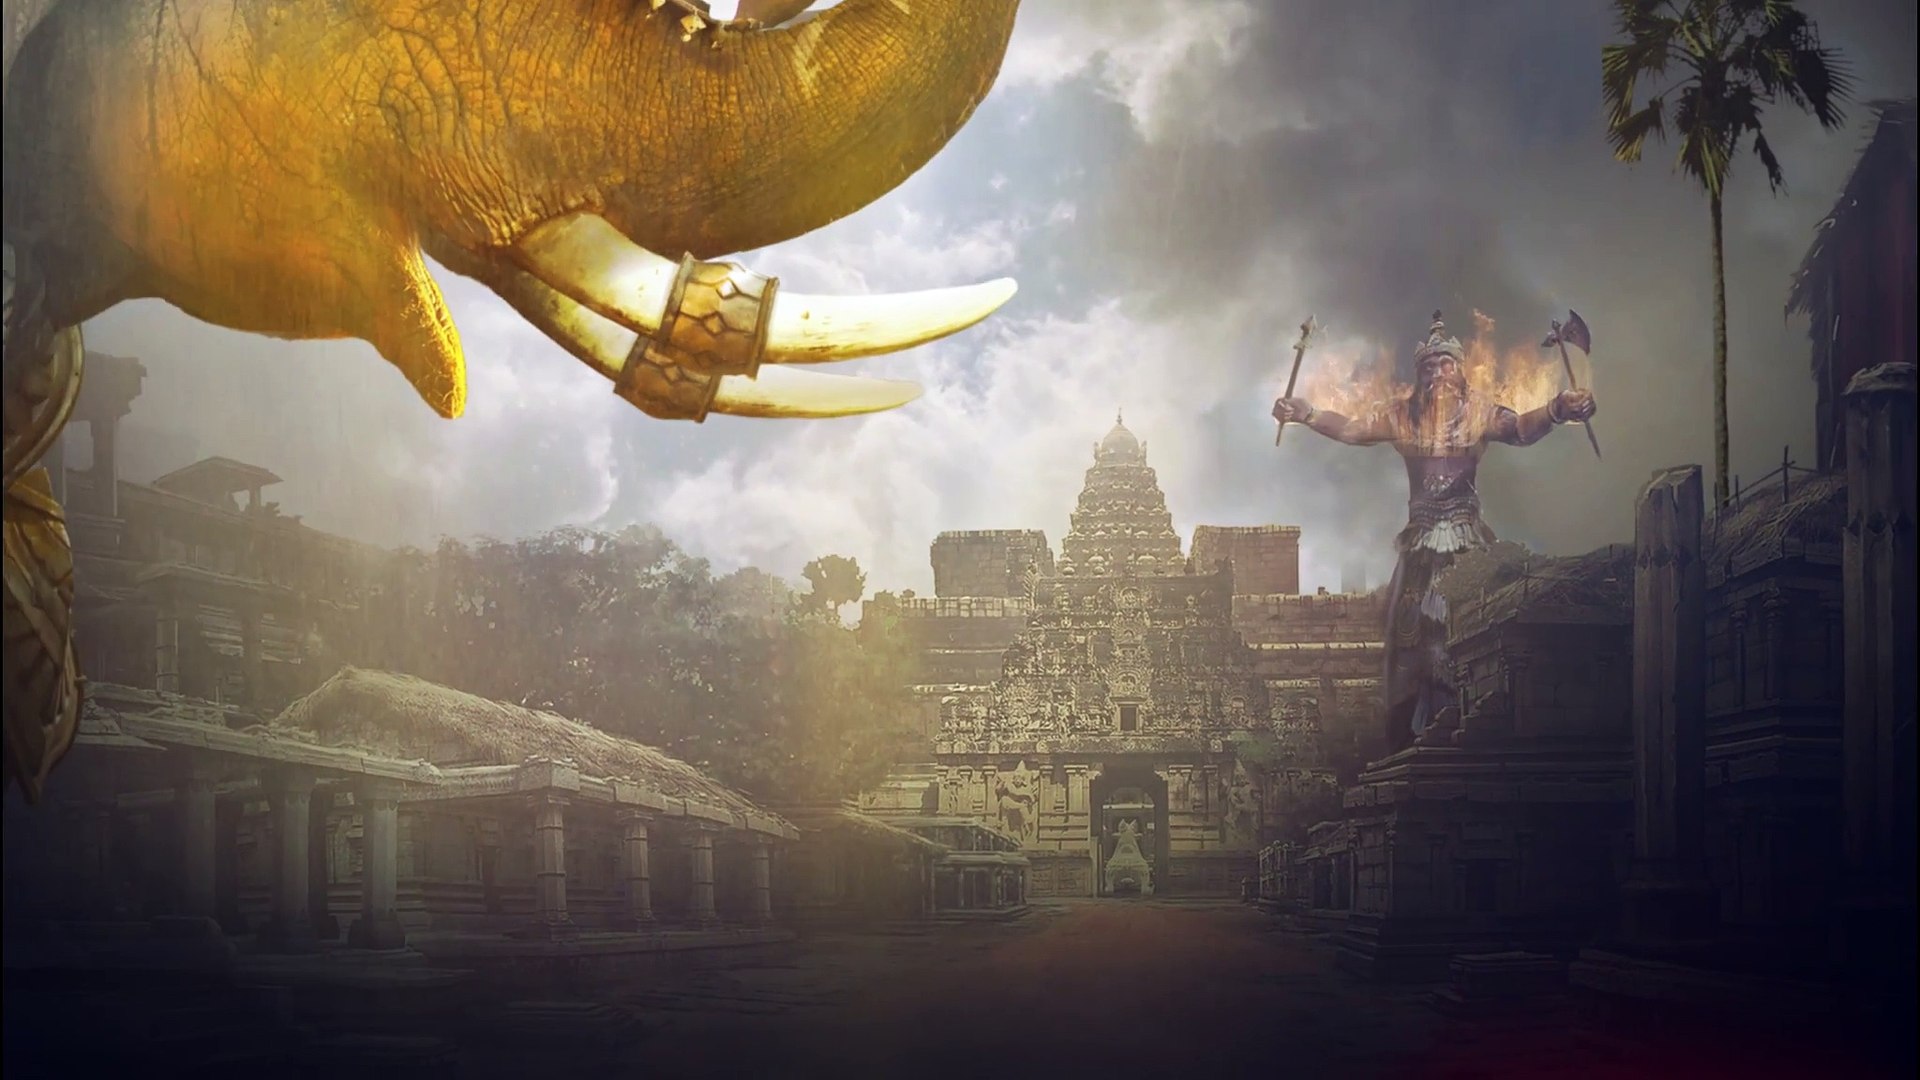 Baahubali 2 by Tamil movie scenes - Dailymotion